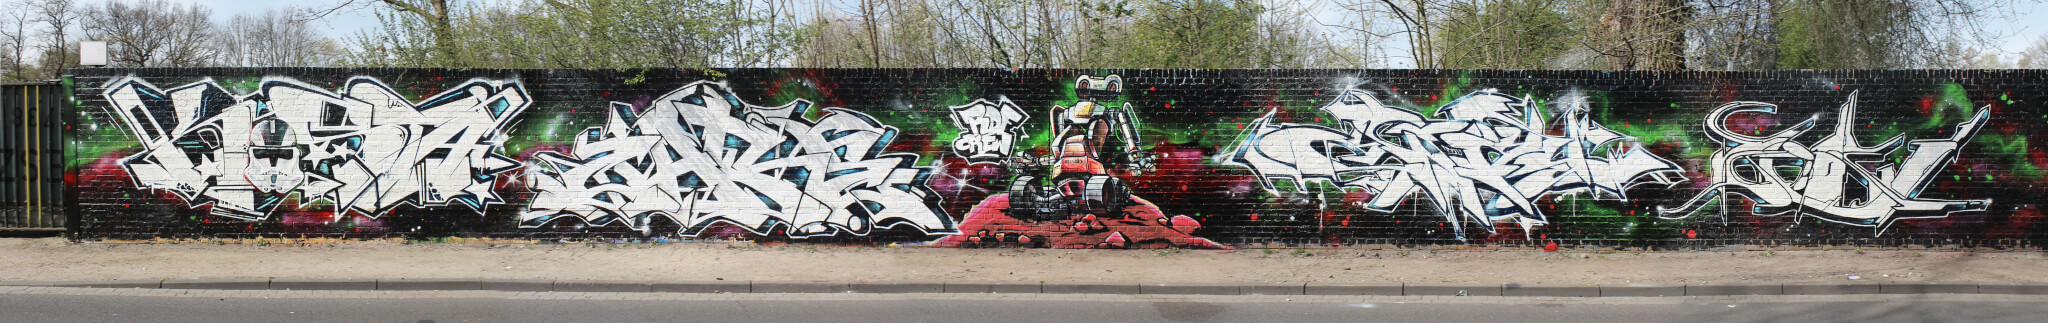 Graffiti in Dinslaken 2015 by RDF Crew (Urban Art Jam)